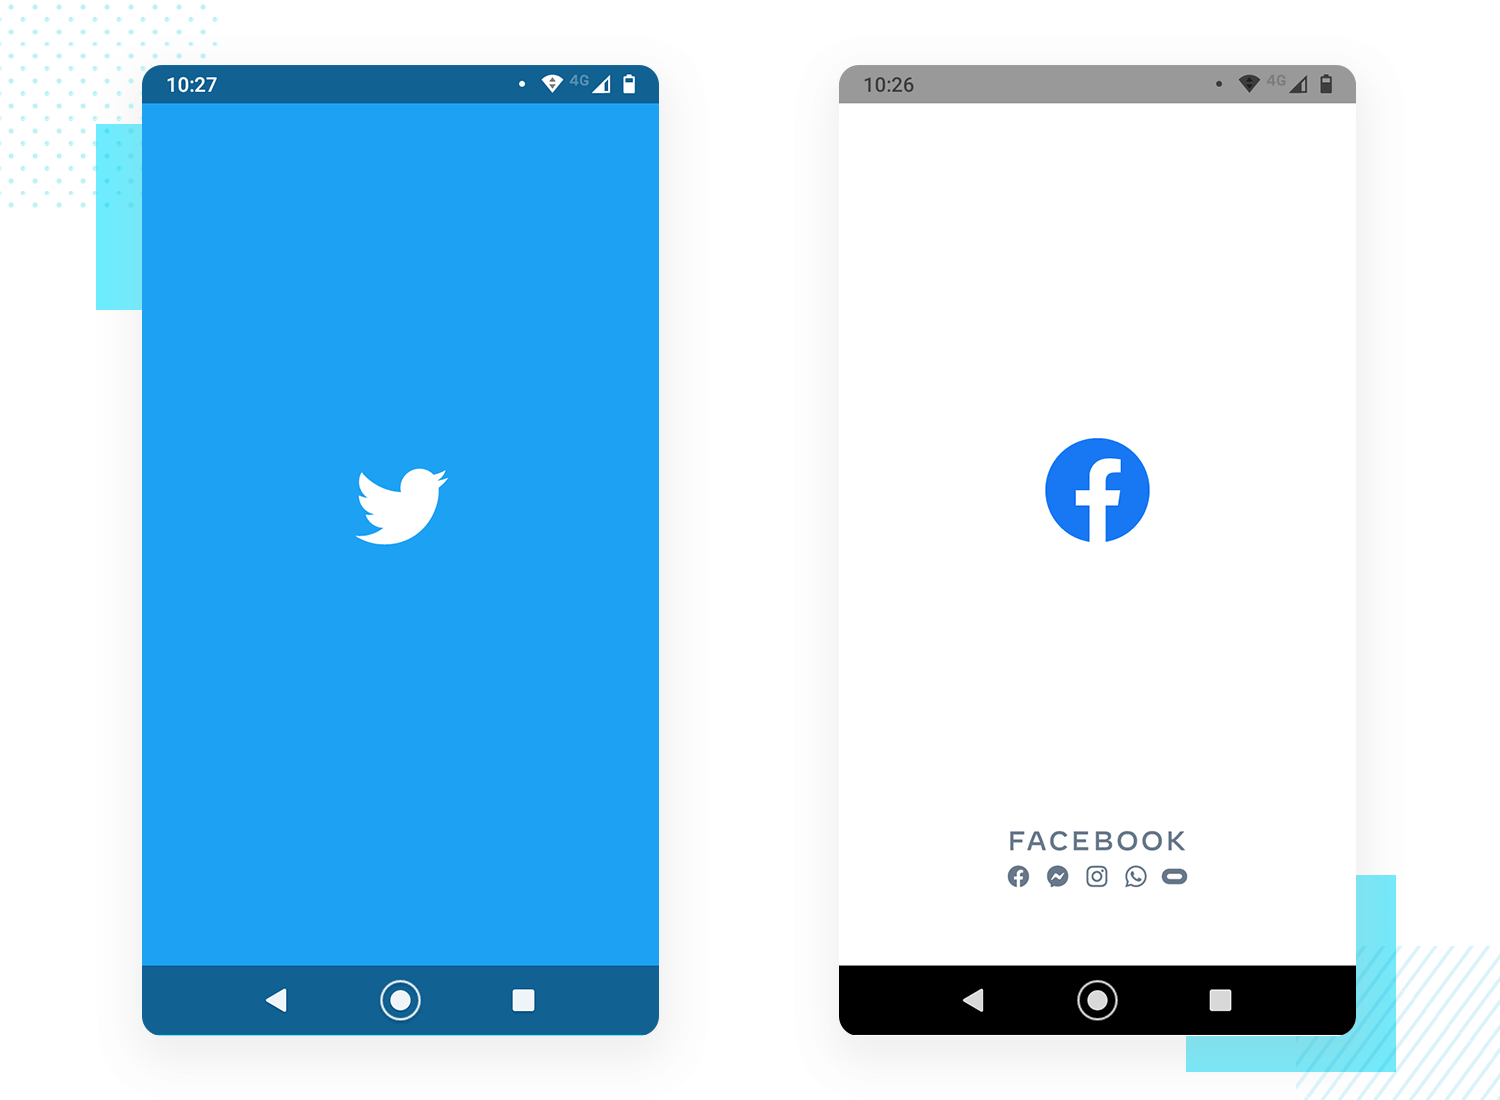 Twitter and Facebook - 20 inspiring splash screens